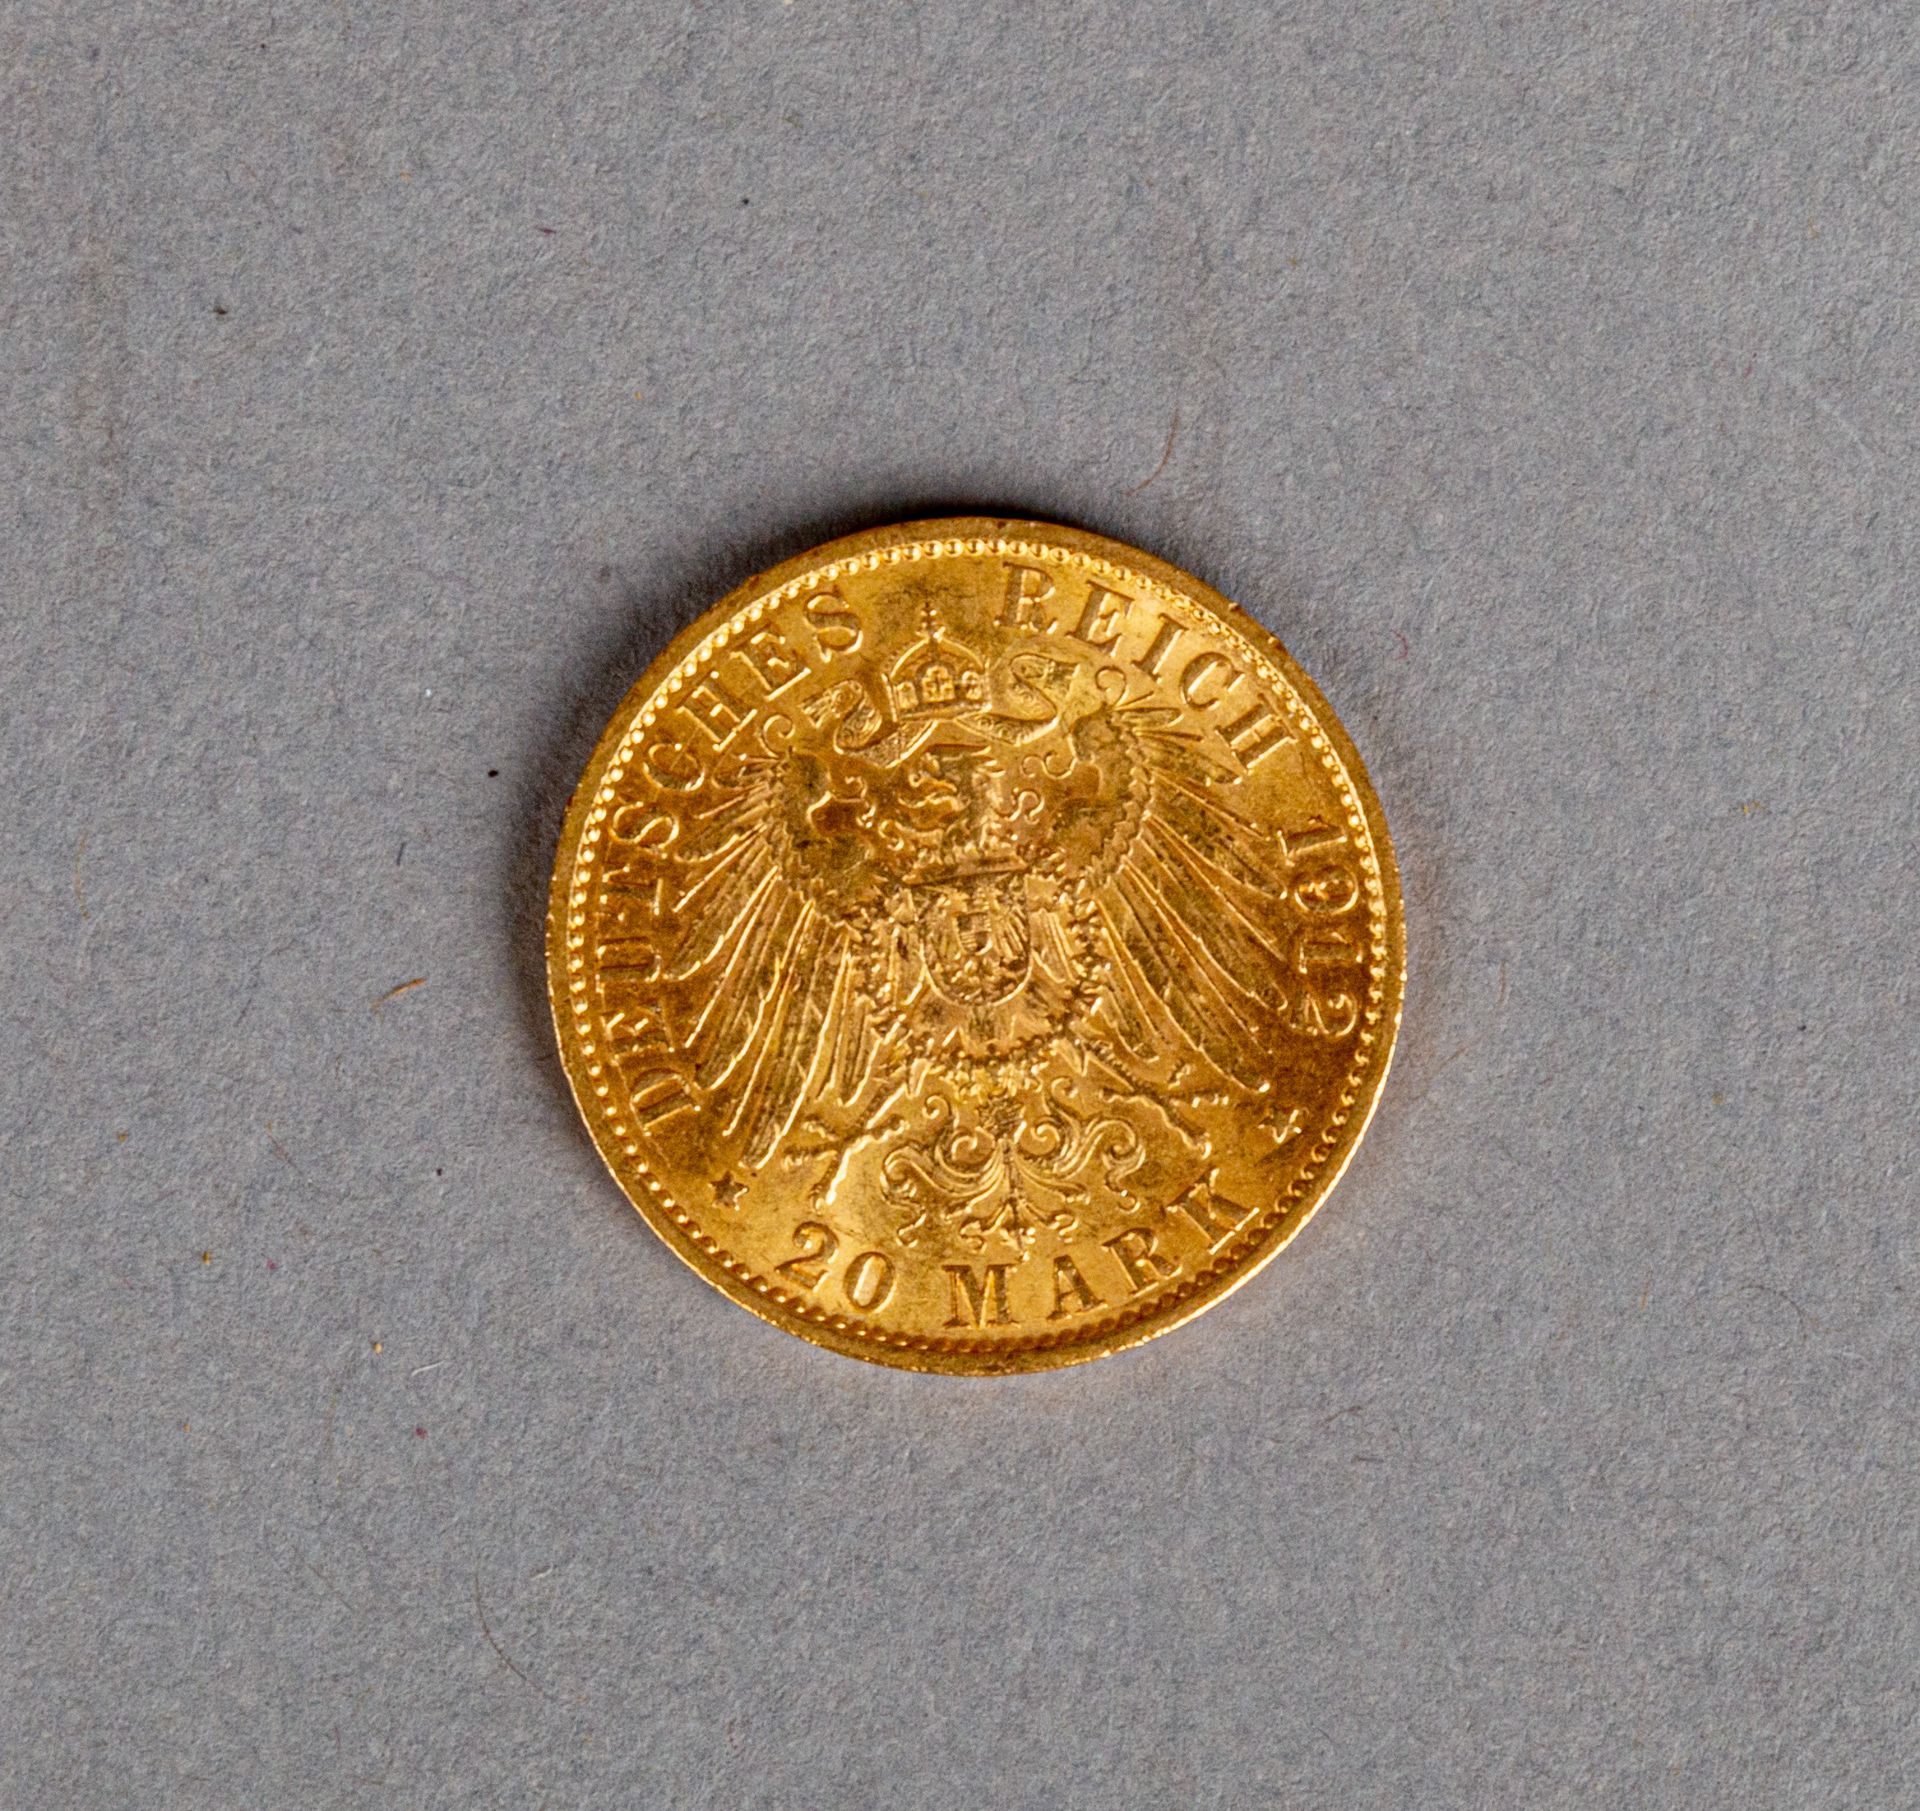 Goldmünze, 20 Mark, 1912 A, Wilhelm II. (Preußen) - Image 2 of 2